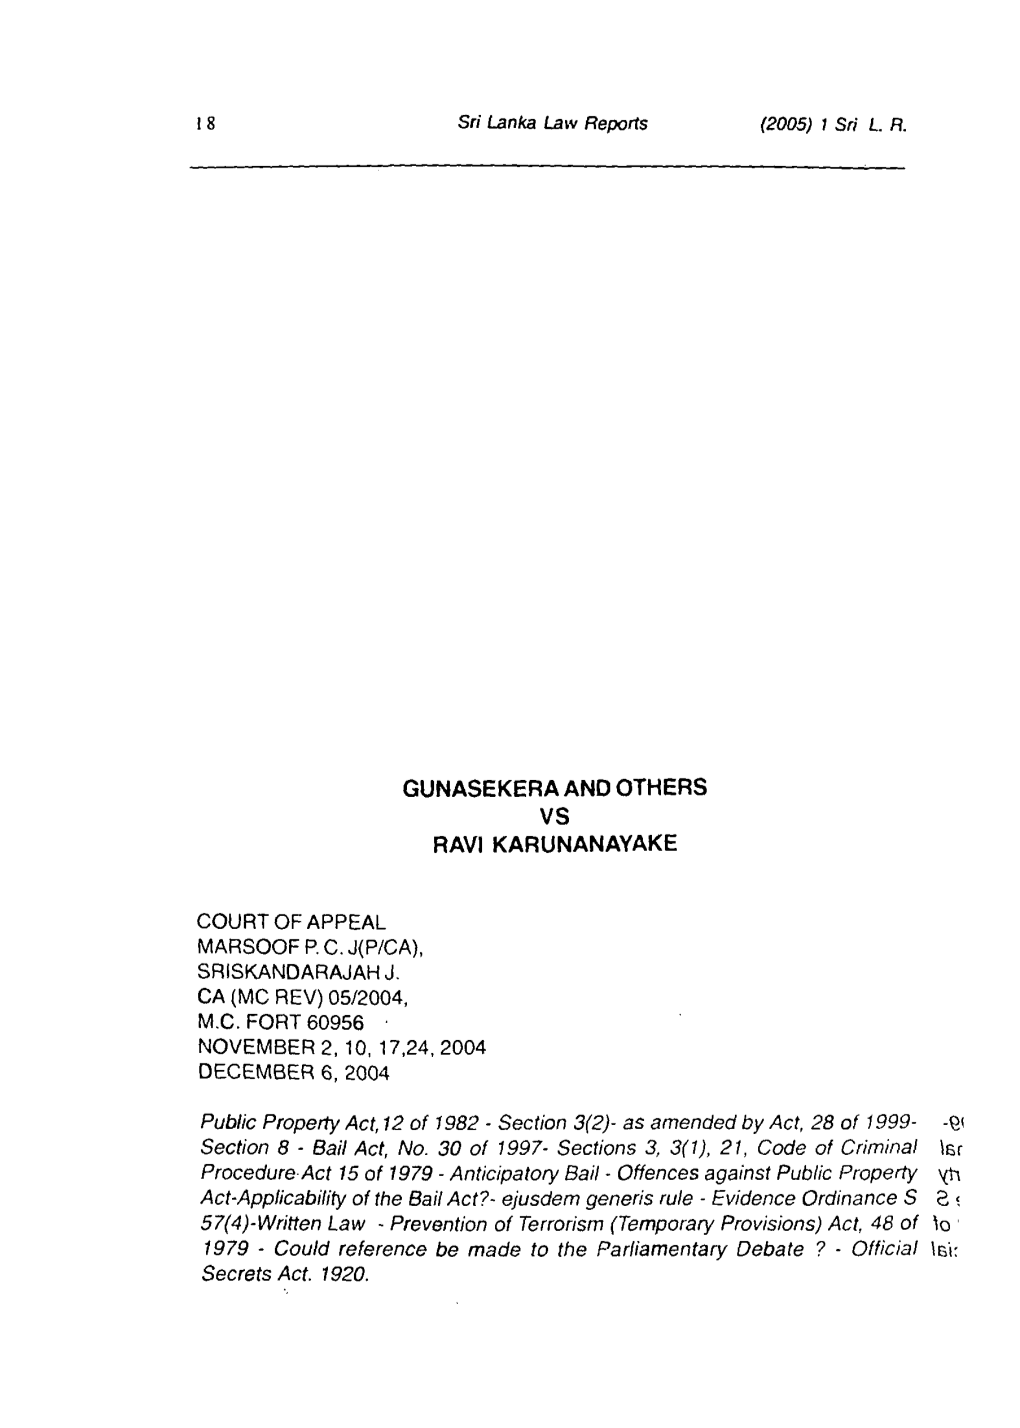 1 Sri LR GUNASEKERA and OTHERS VS RAVI KARUNANAYAKE COURT of APPEAL MARSOOF PC J(P/CA)